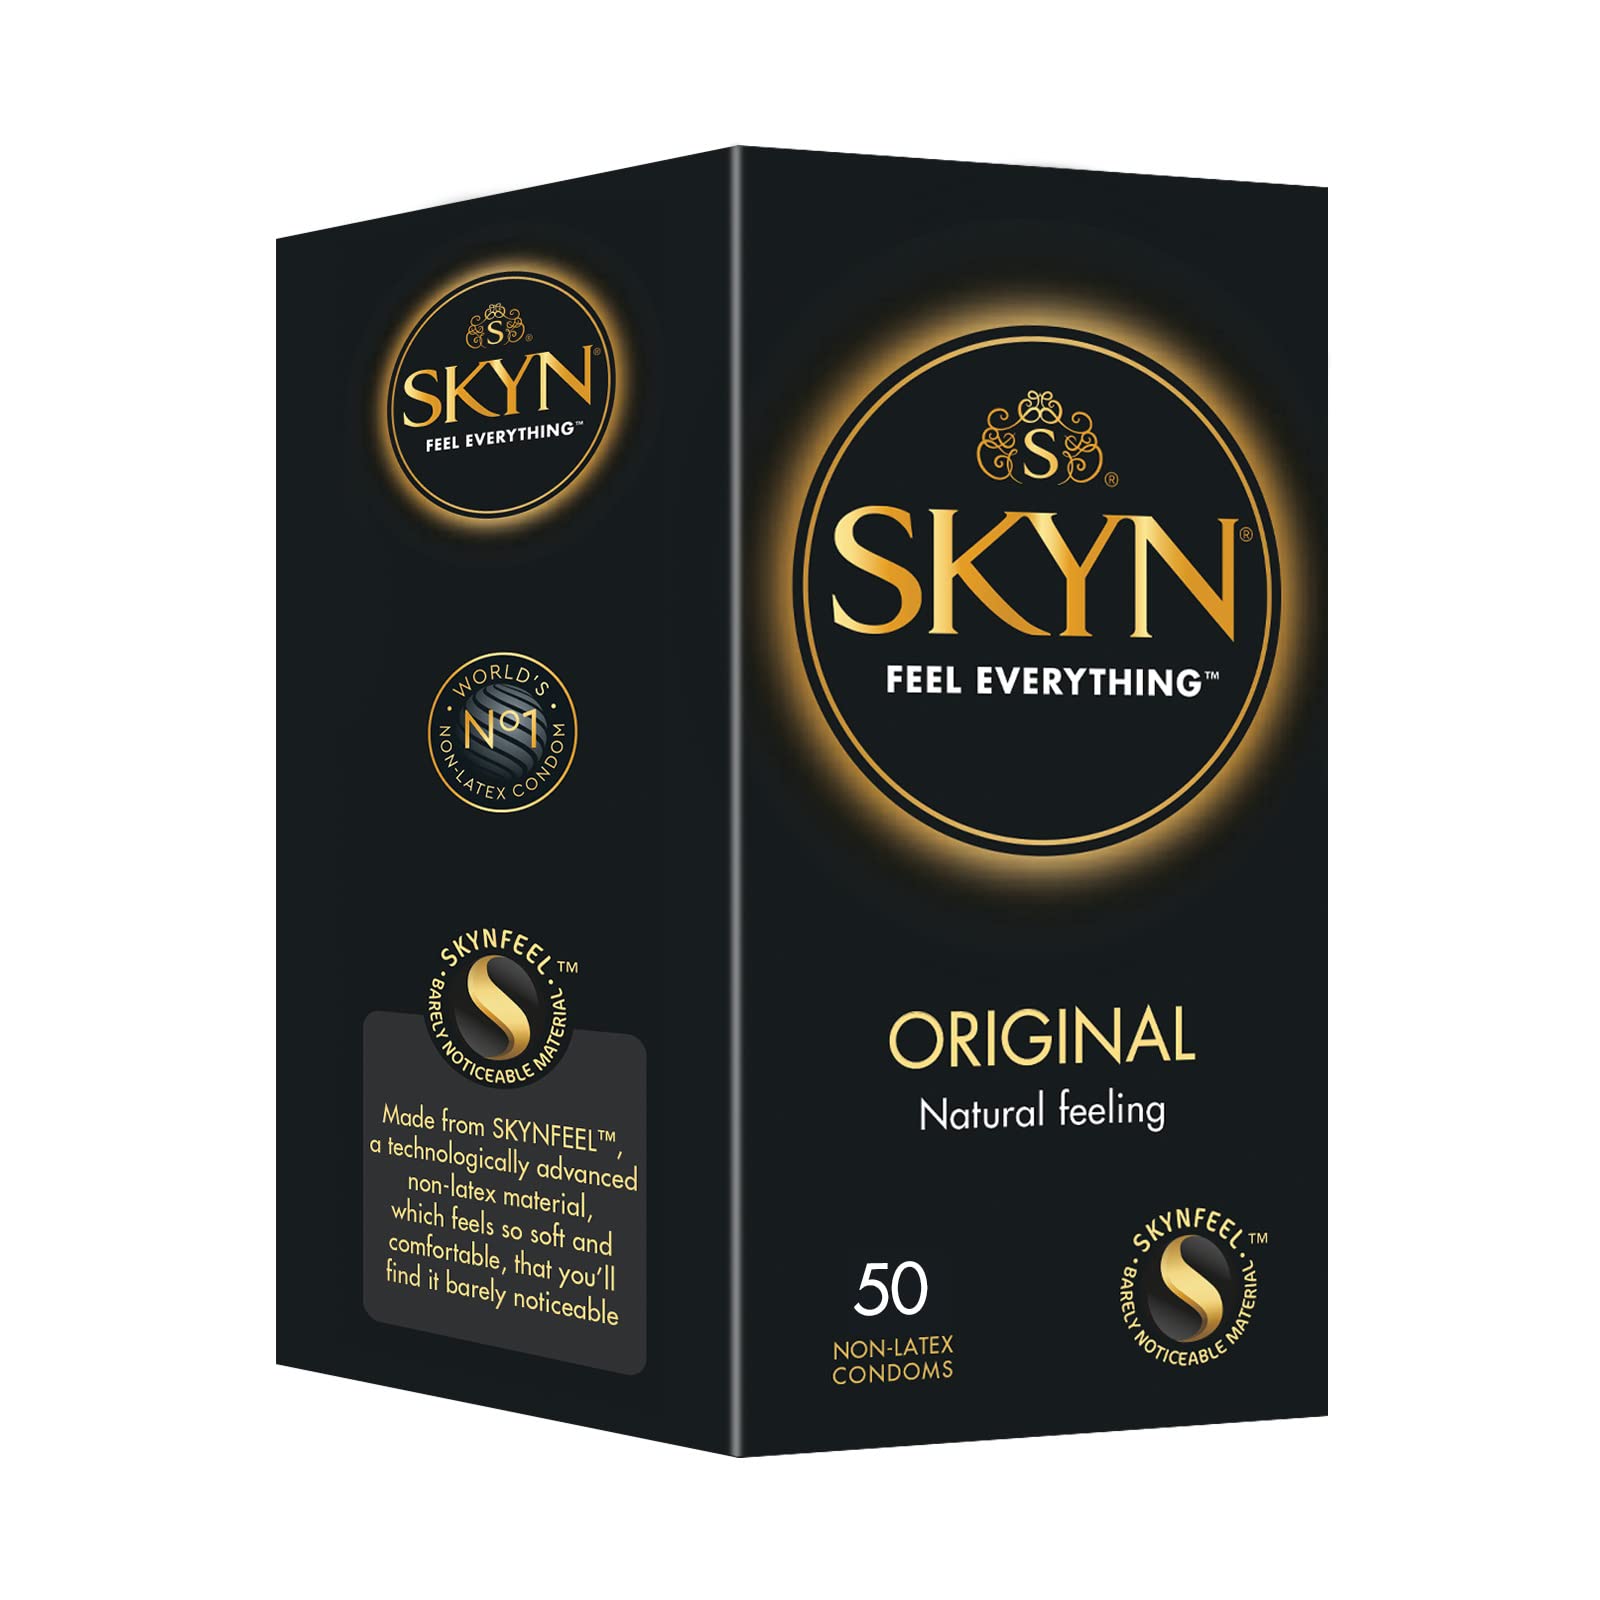 SKYN Original Kondome (50 Stück) | Skynfeel Latexfreie Kondome für Männer, Hauchzart, Dünne Kondome 53mm Breite